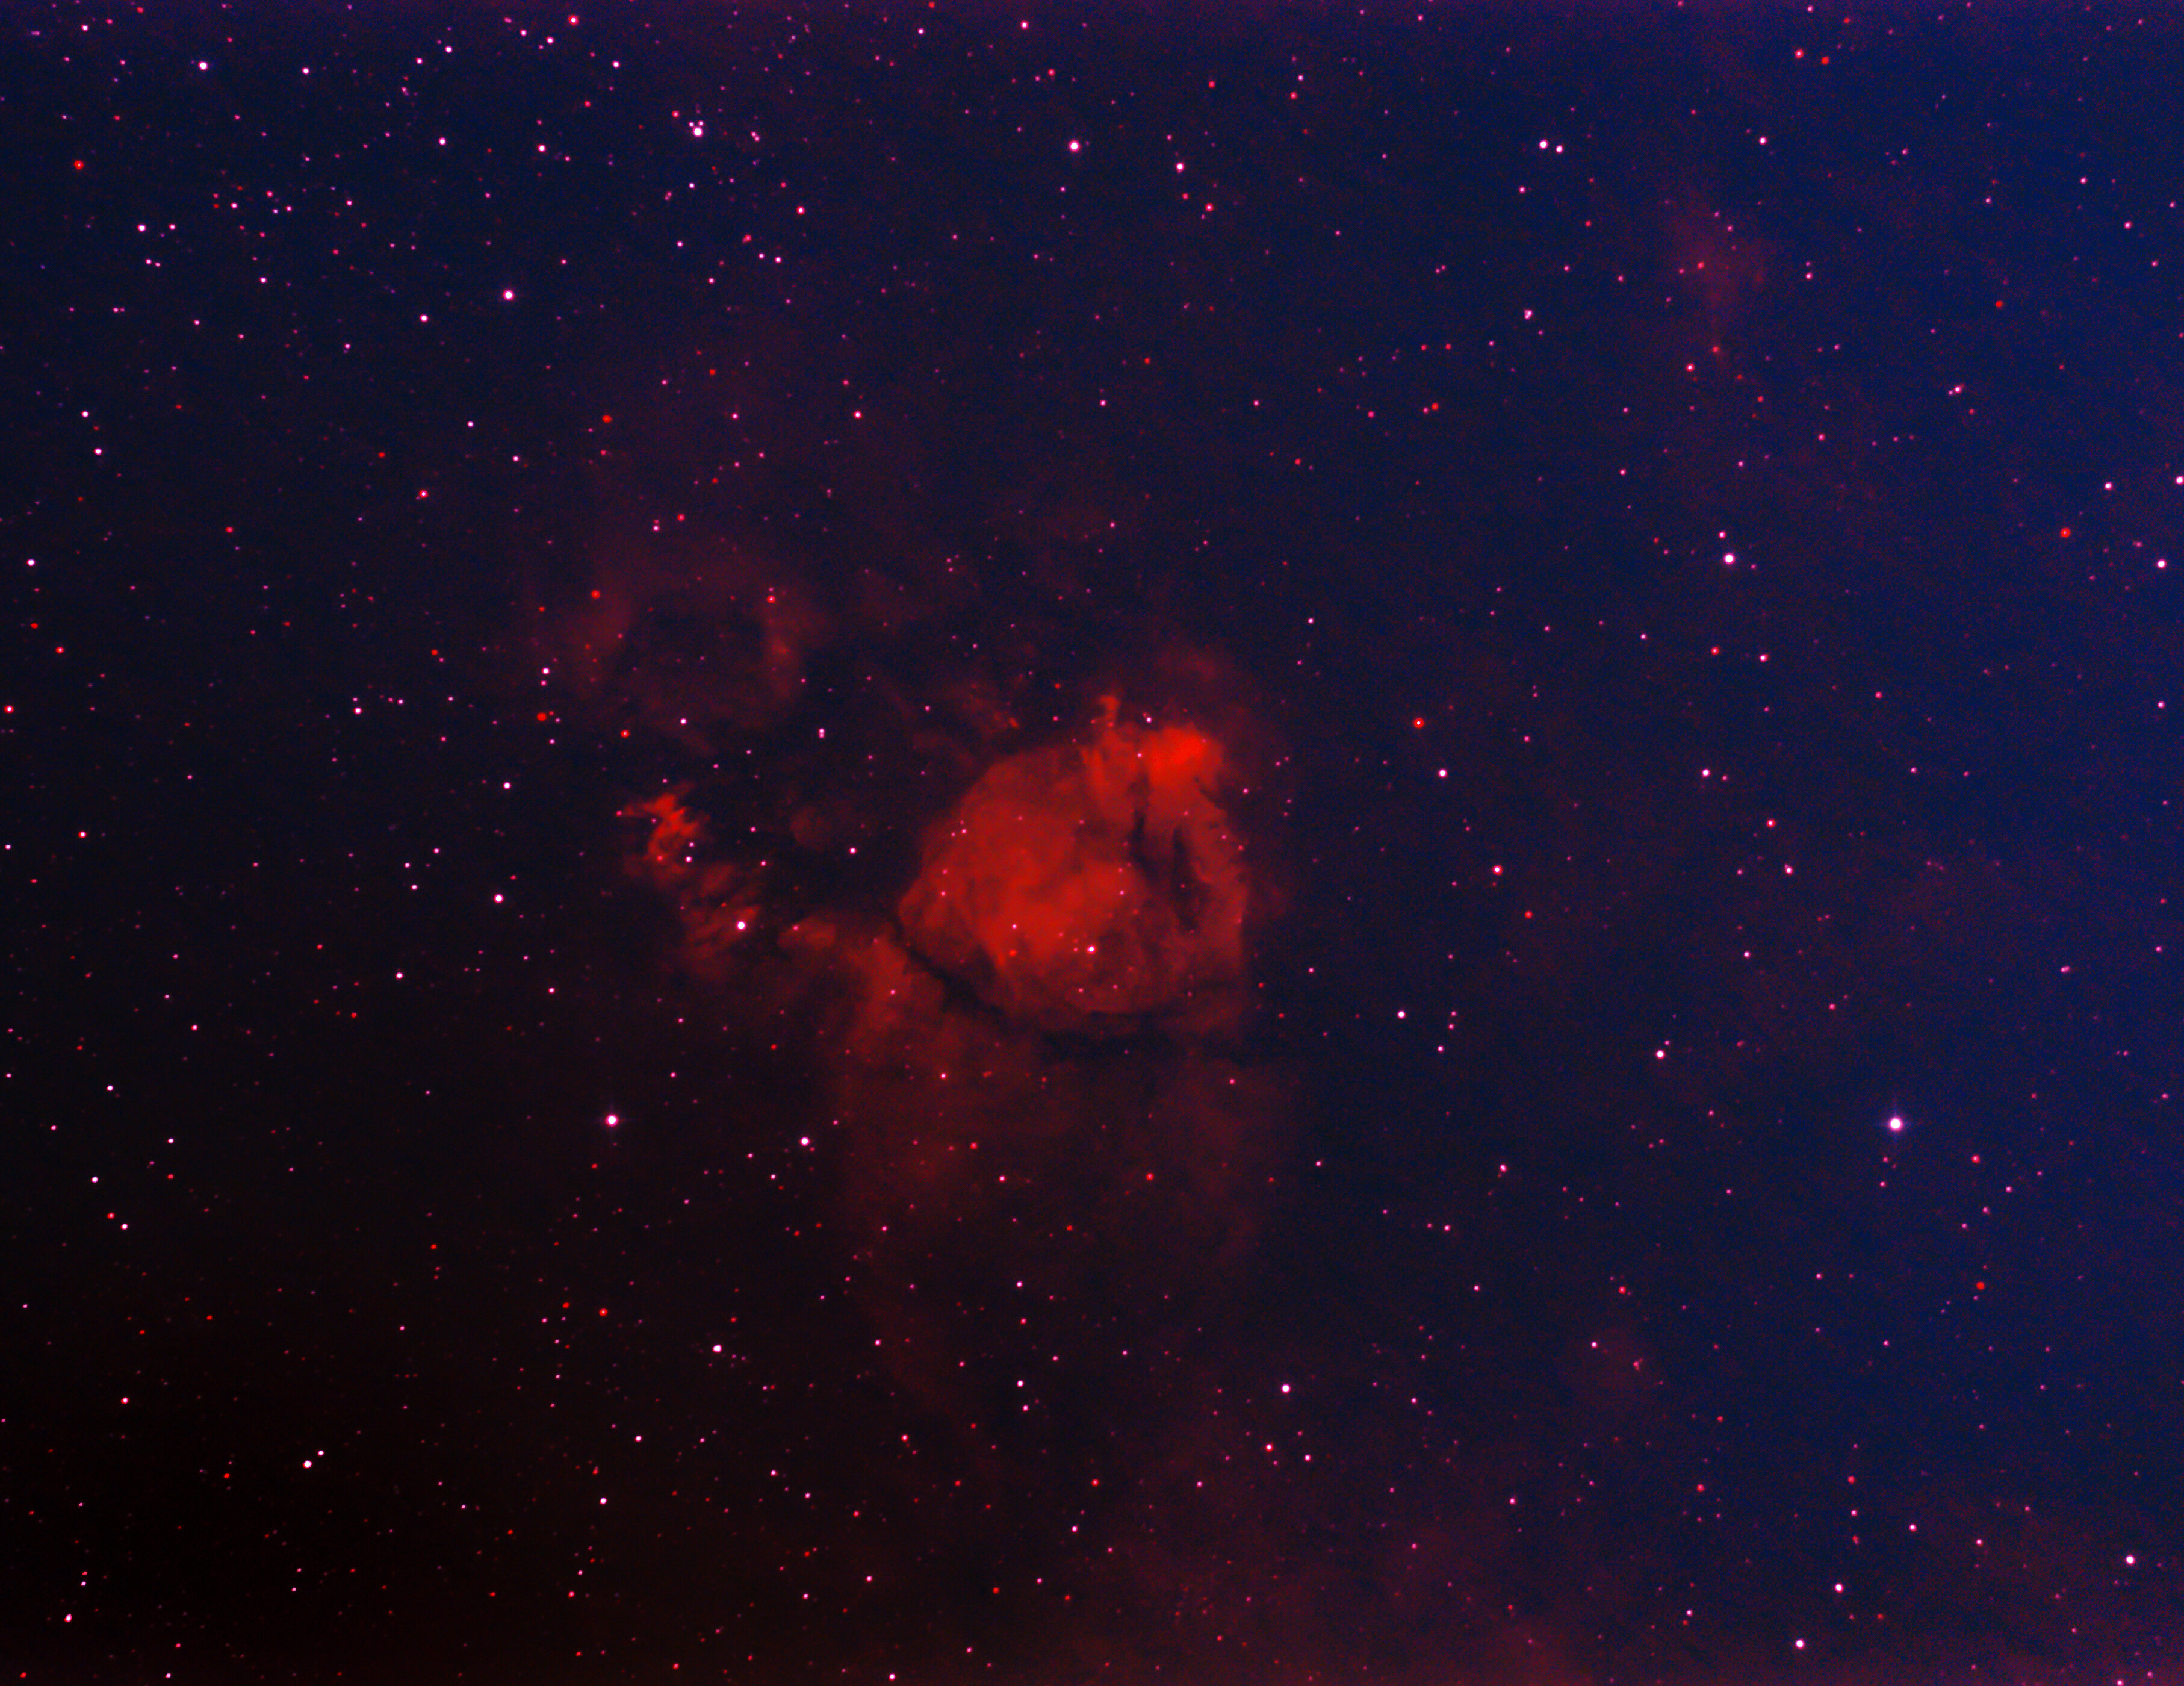 Fishhead nebula